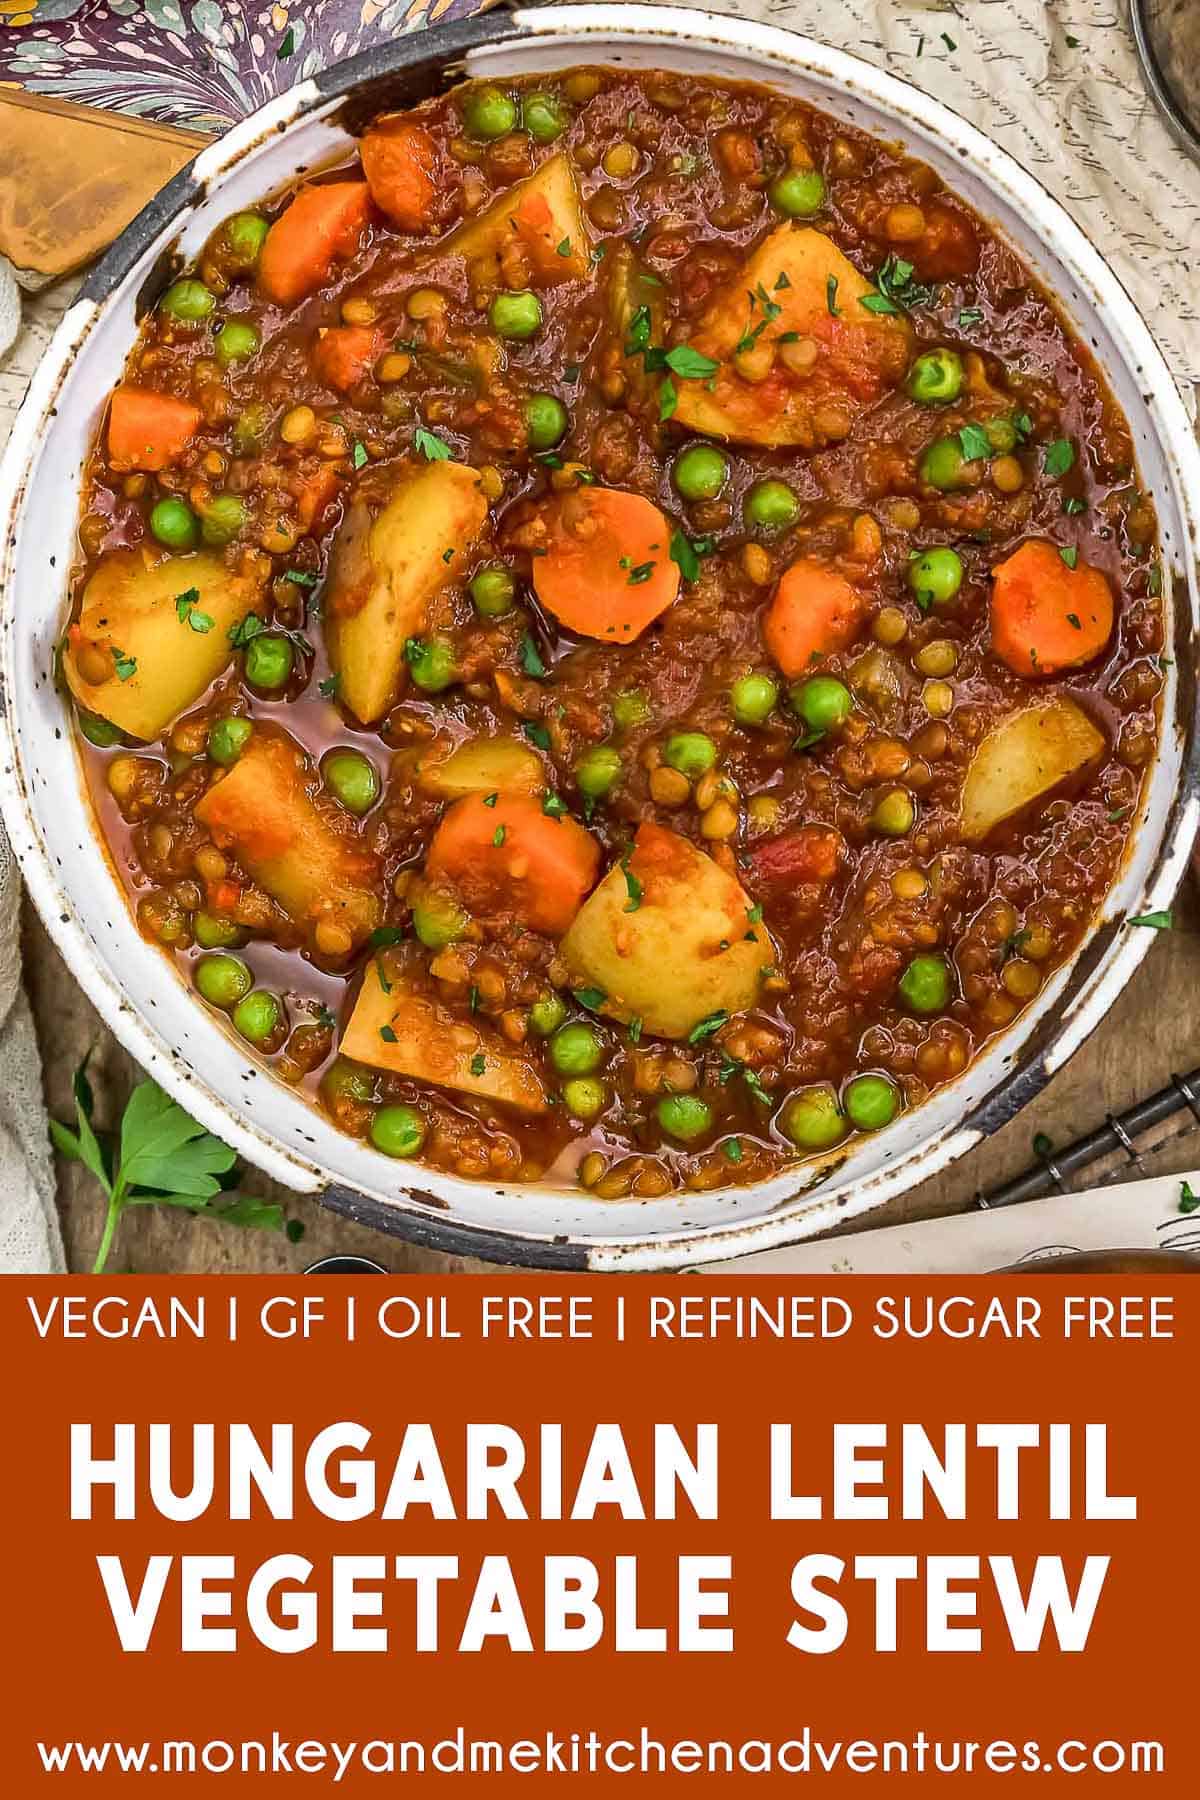 Hungarian Lentil Vegetable Stew with text description